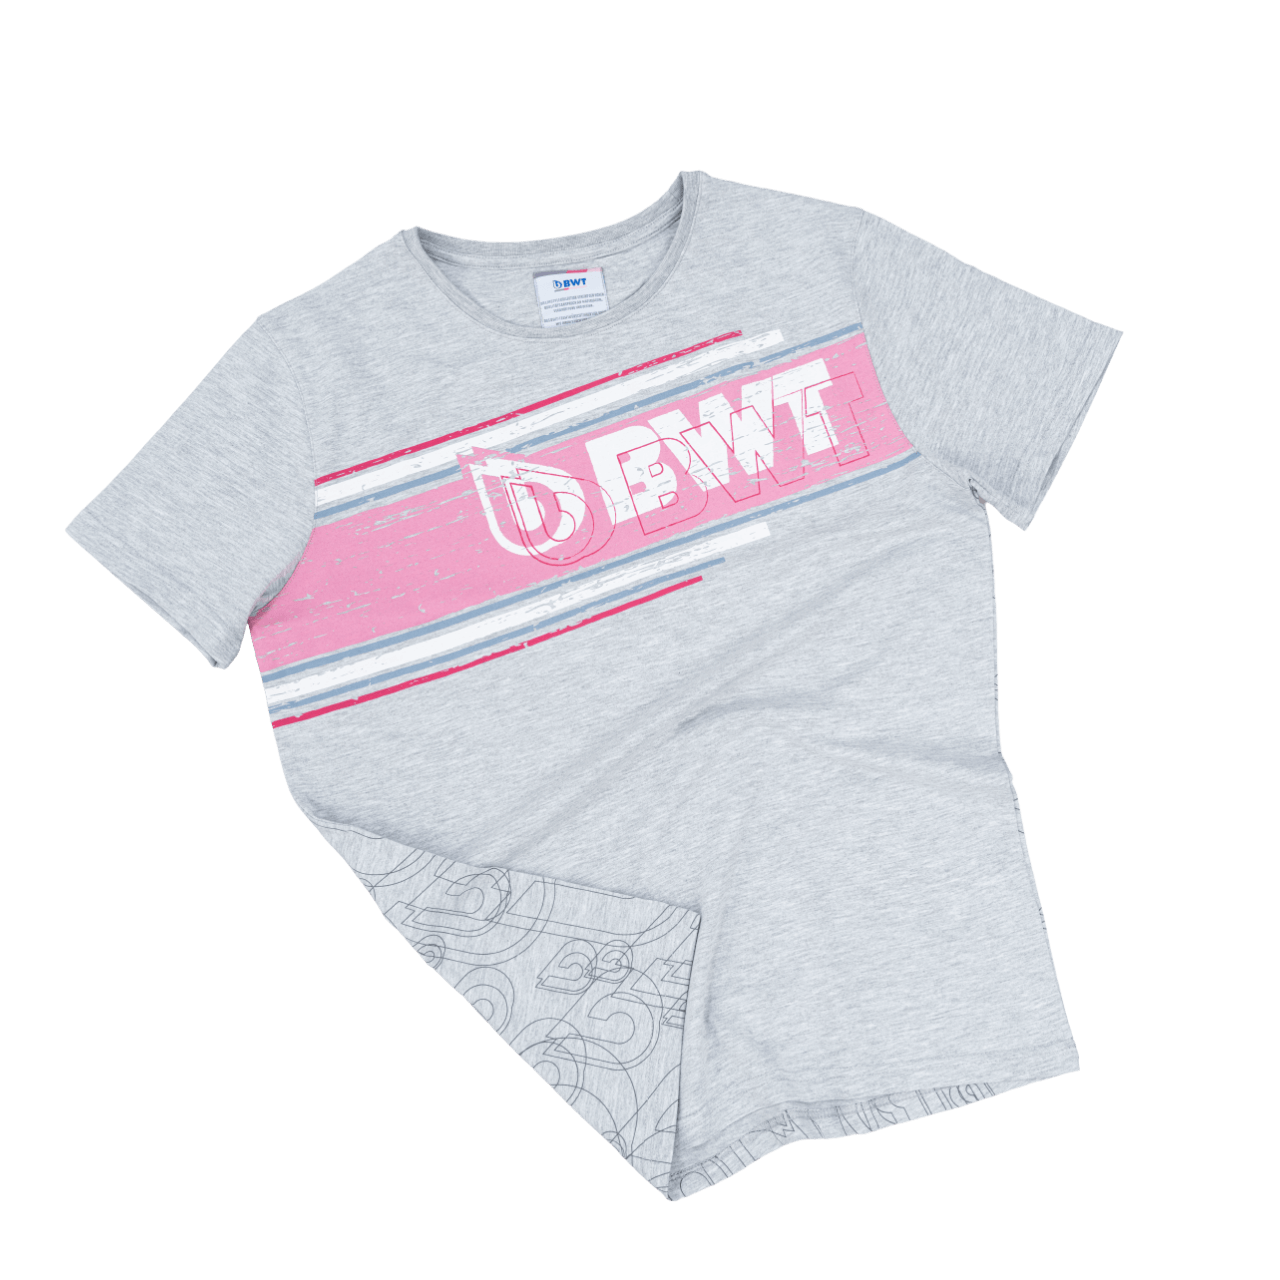 BWT Lifestyle T-shirt heren grijs met wit BWT logo op roze achtergrond